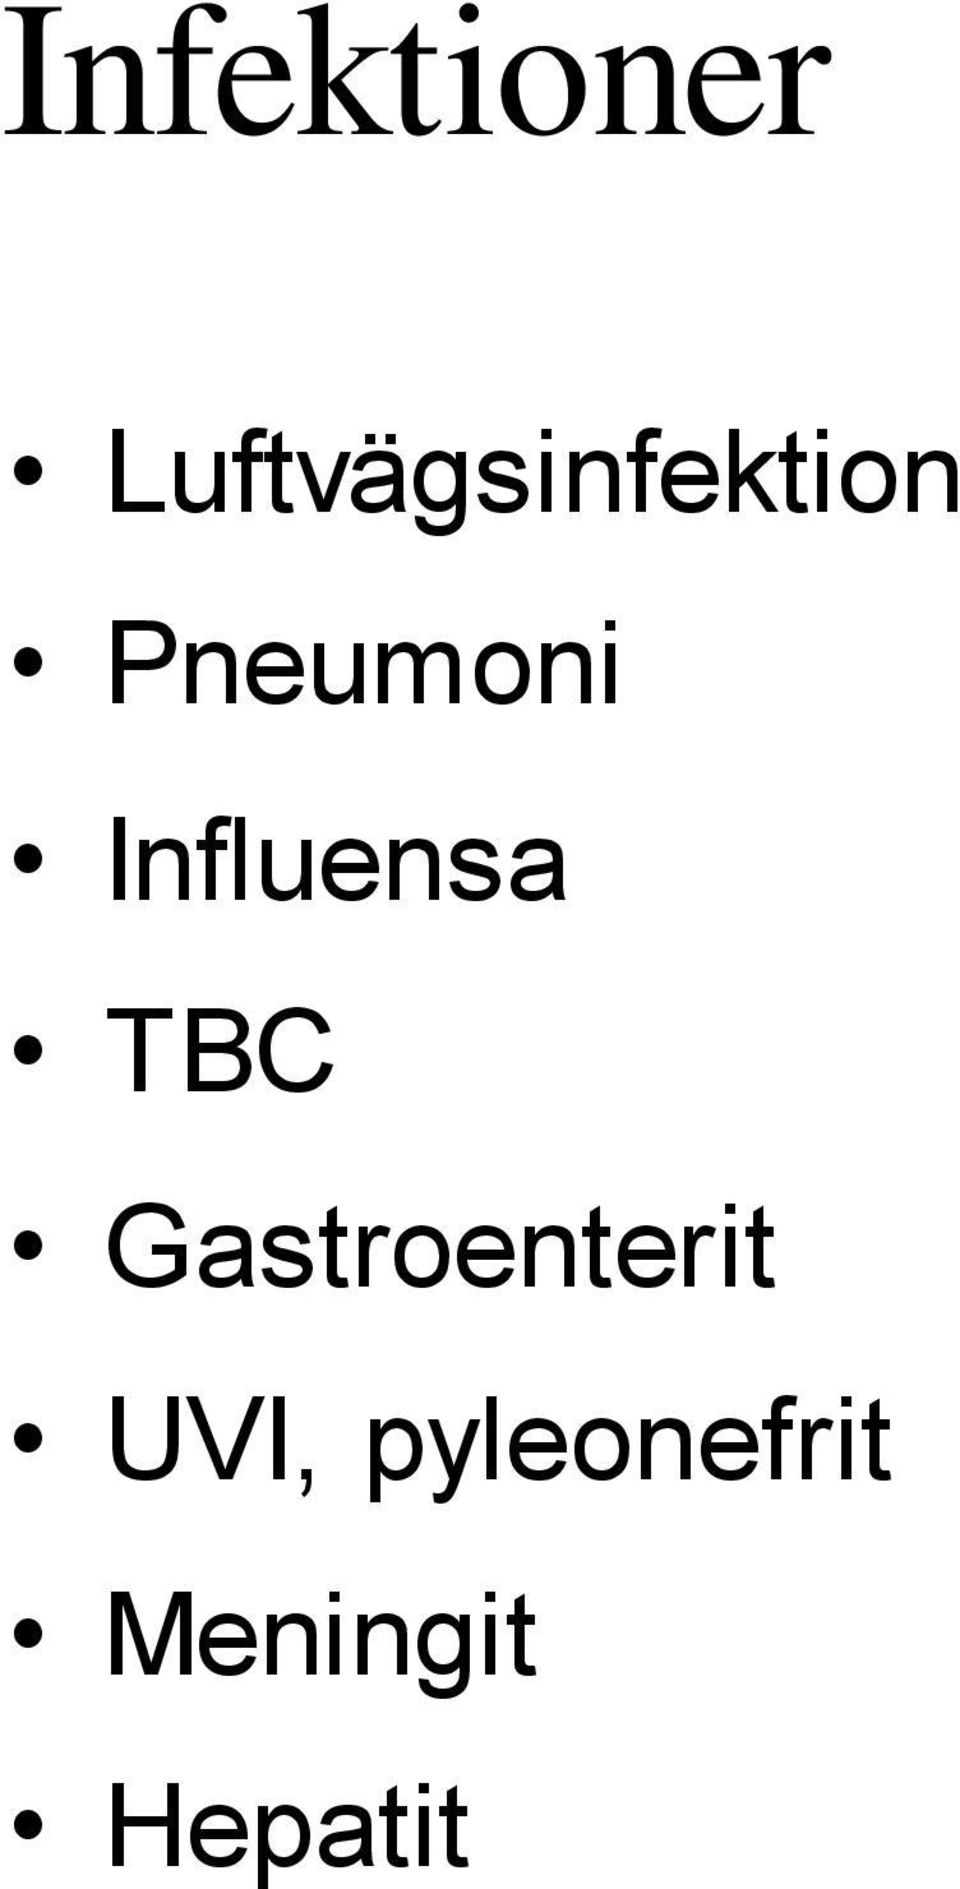 Pneumoni Influensa TBC